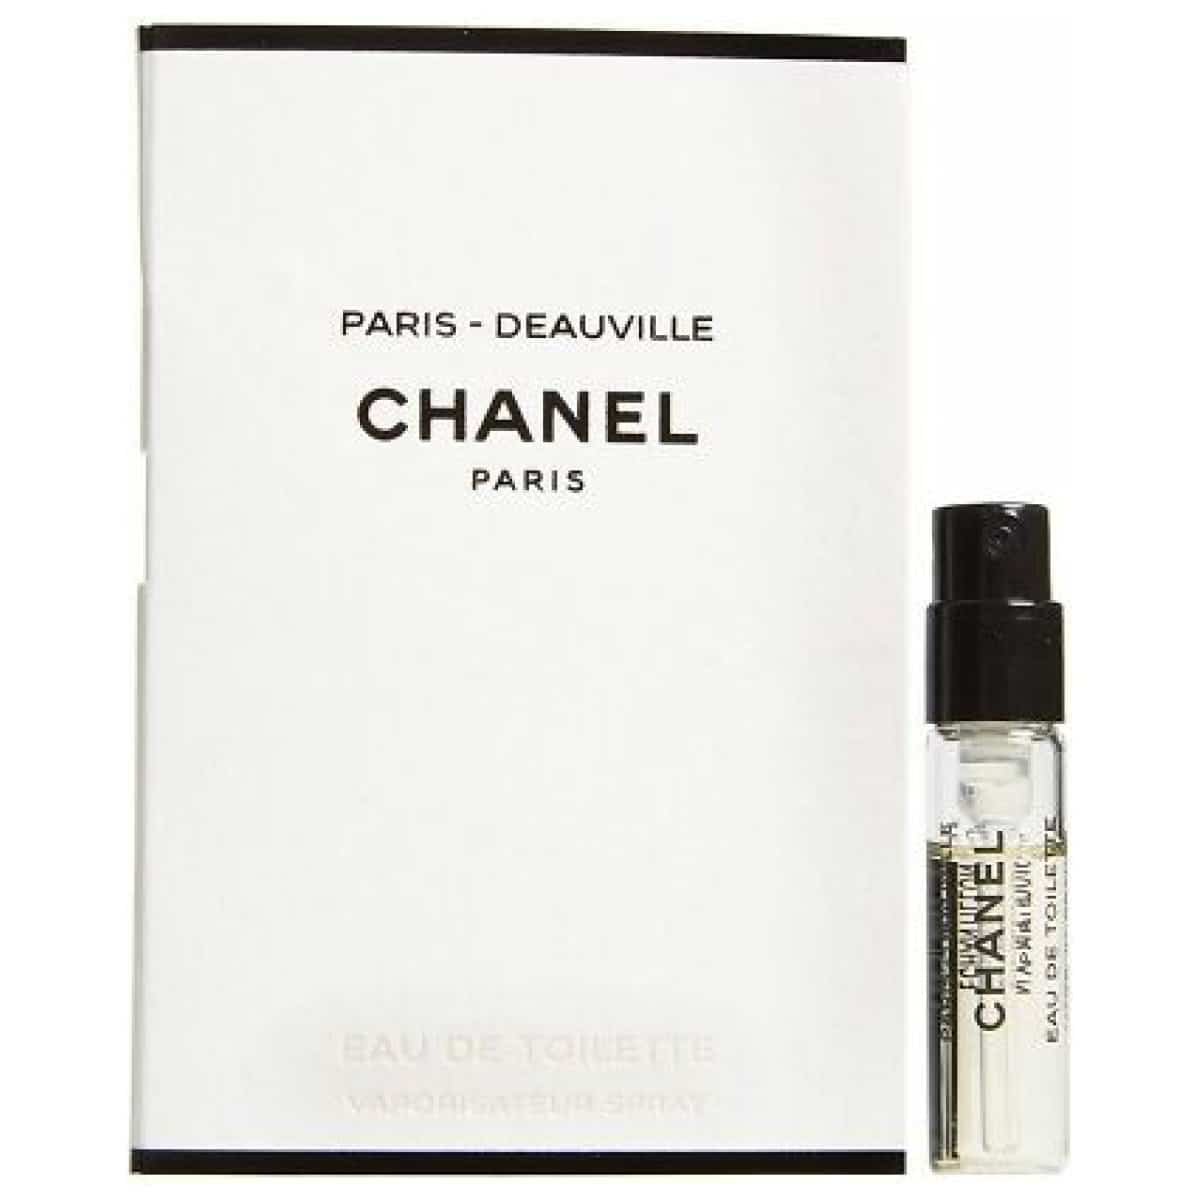 Chanel Paris Deauville EDP Pocket Perfume For Women 1.5ml